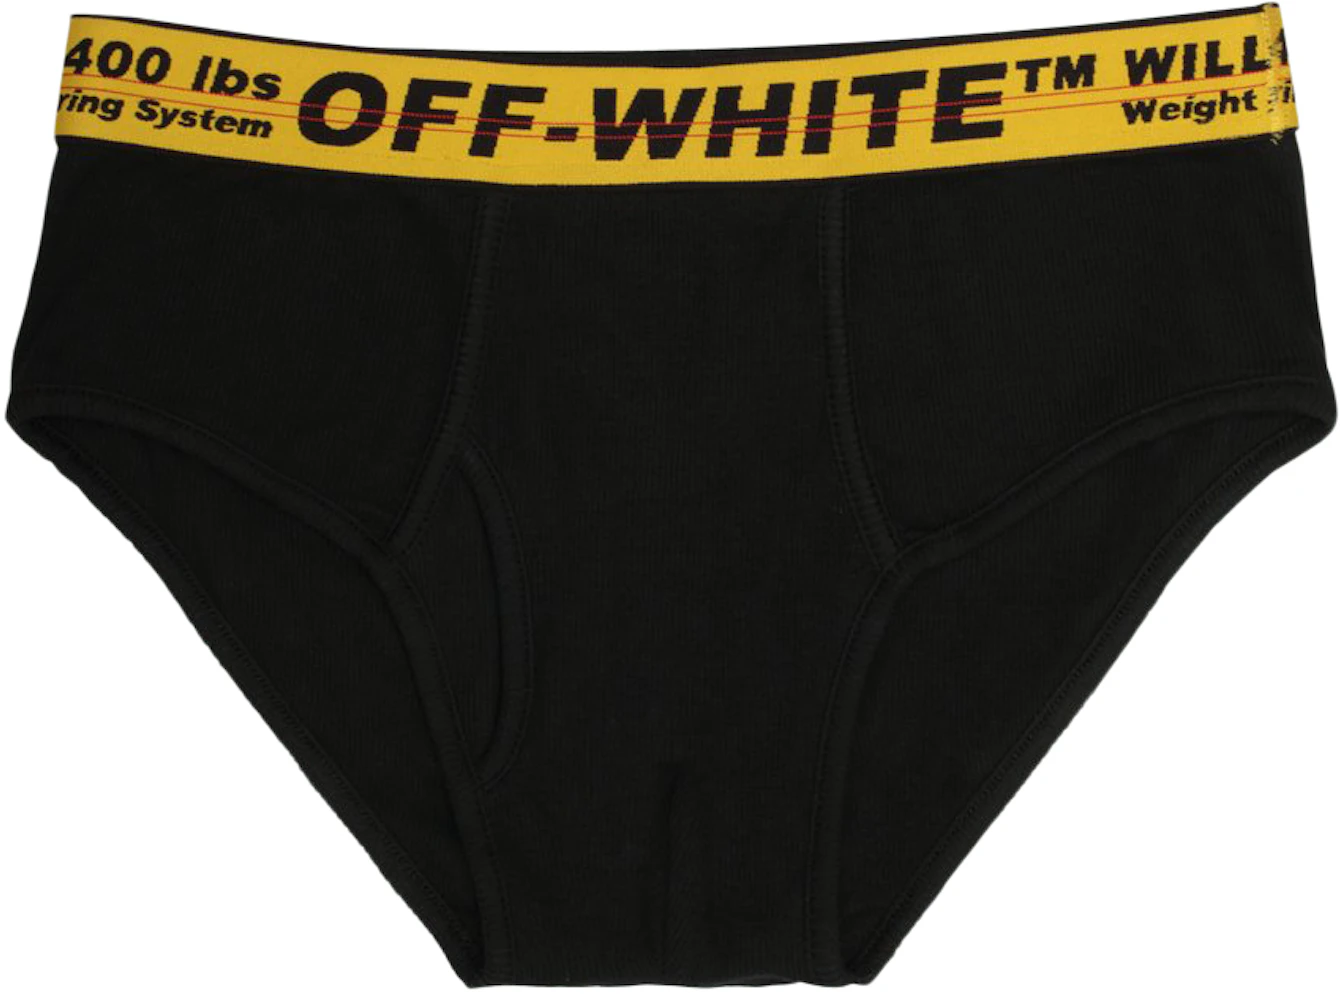 https://images.stockx.com/images/OFF-WHITE-Single-Pack-Slip-Underwear-Black-Yellow-Black.jpg?fit=fill&bg=FFFFFF&w=700&h=500&fm=webp&auto=compress&q=90&dpr=2&trim=color&updated_at=1627945619